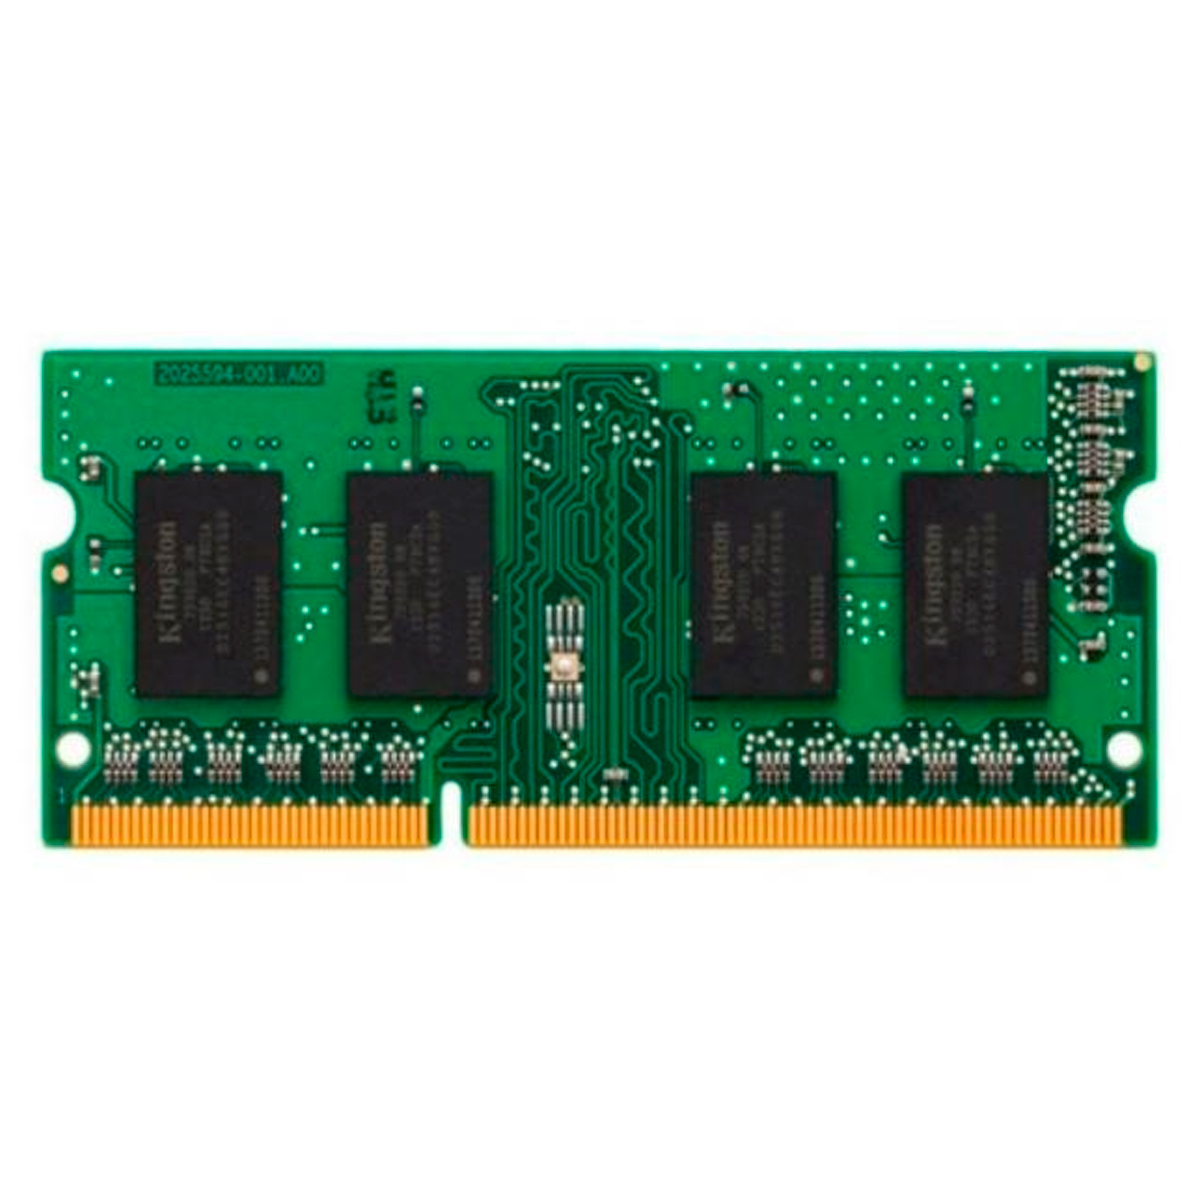 MEMORIA RAM KINGSTON KVR32S22S6 8 8GB DDR4 3200 SODIMM PC4 1RX16 CL22 1G X 64 BIT